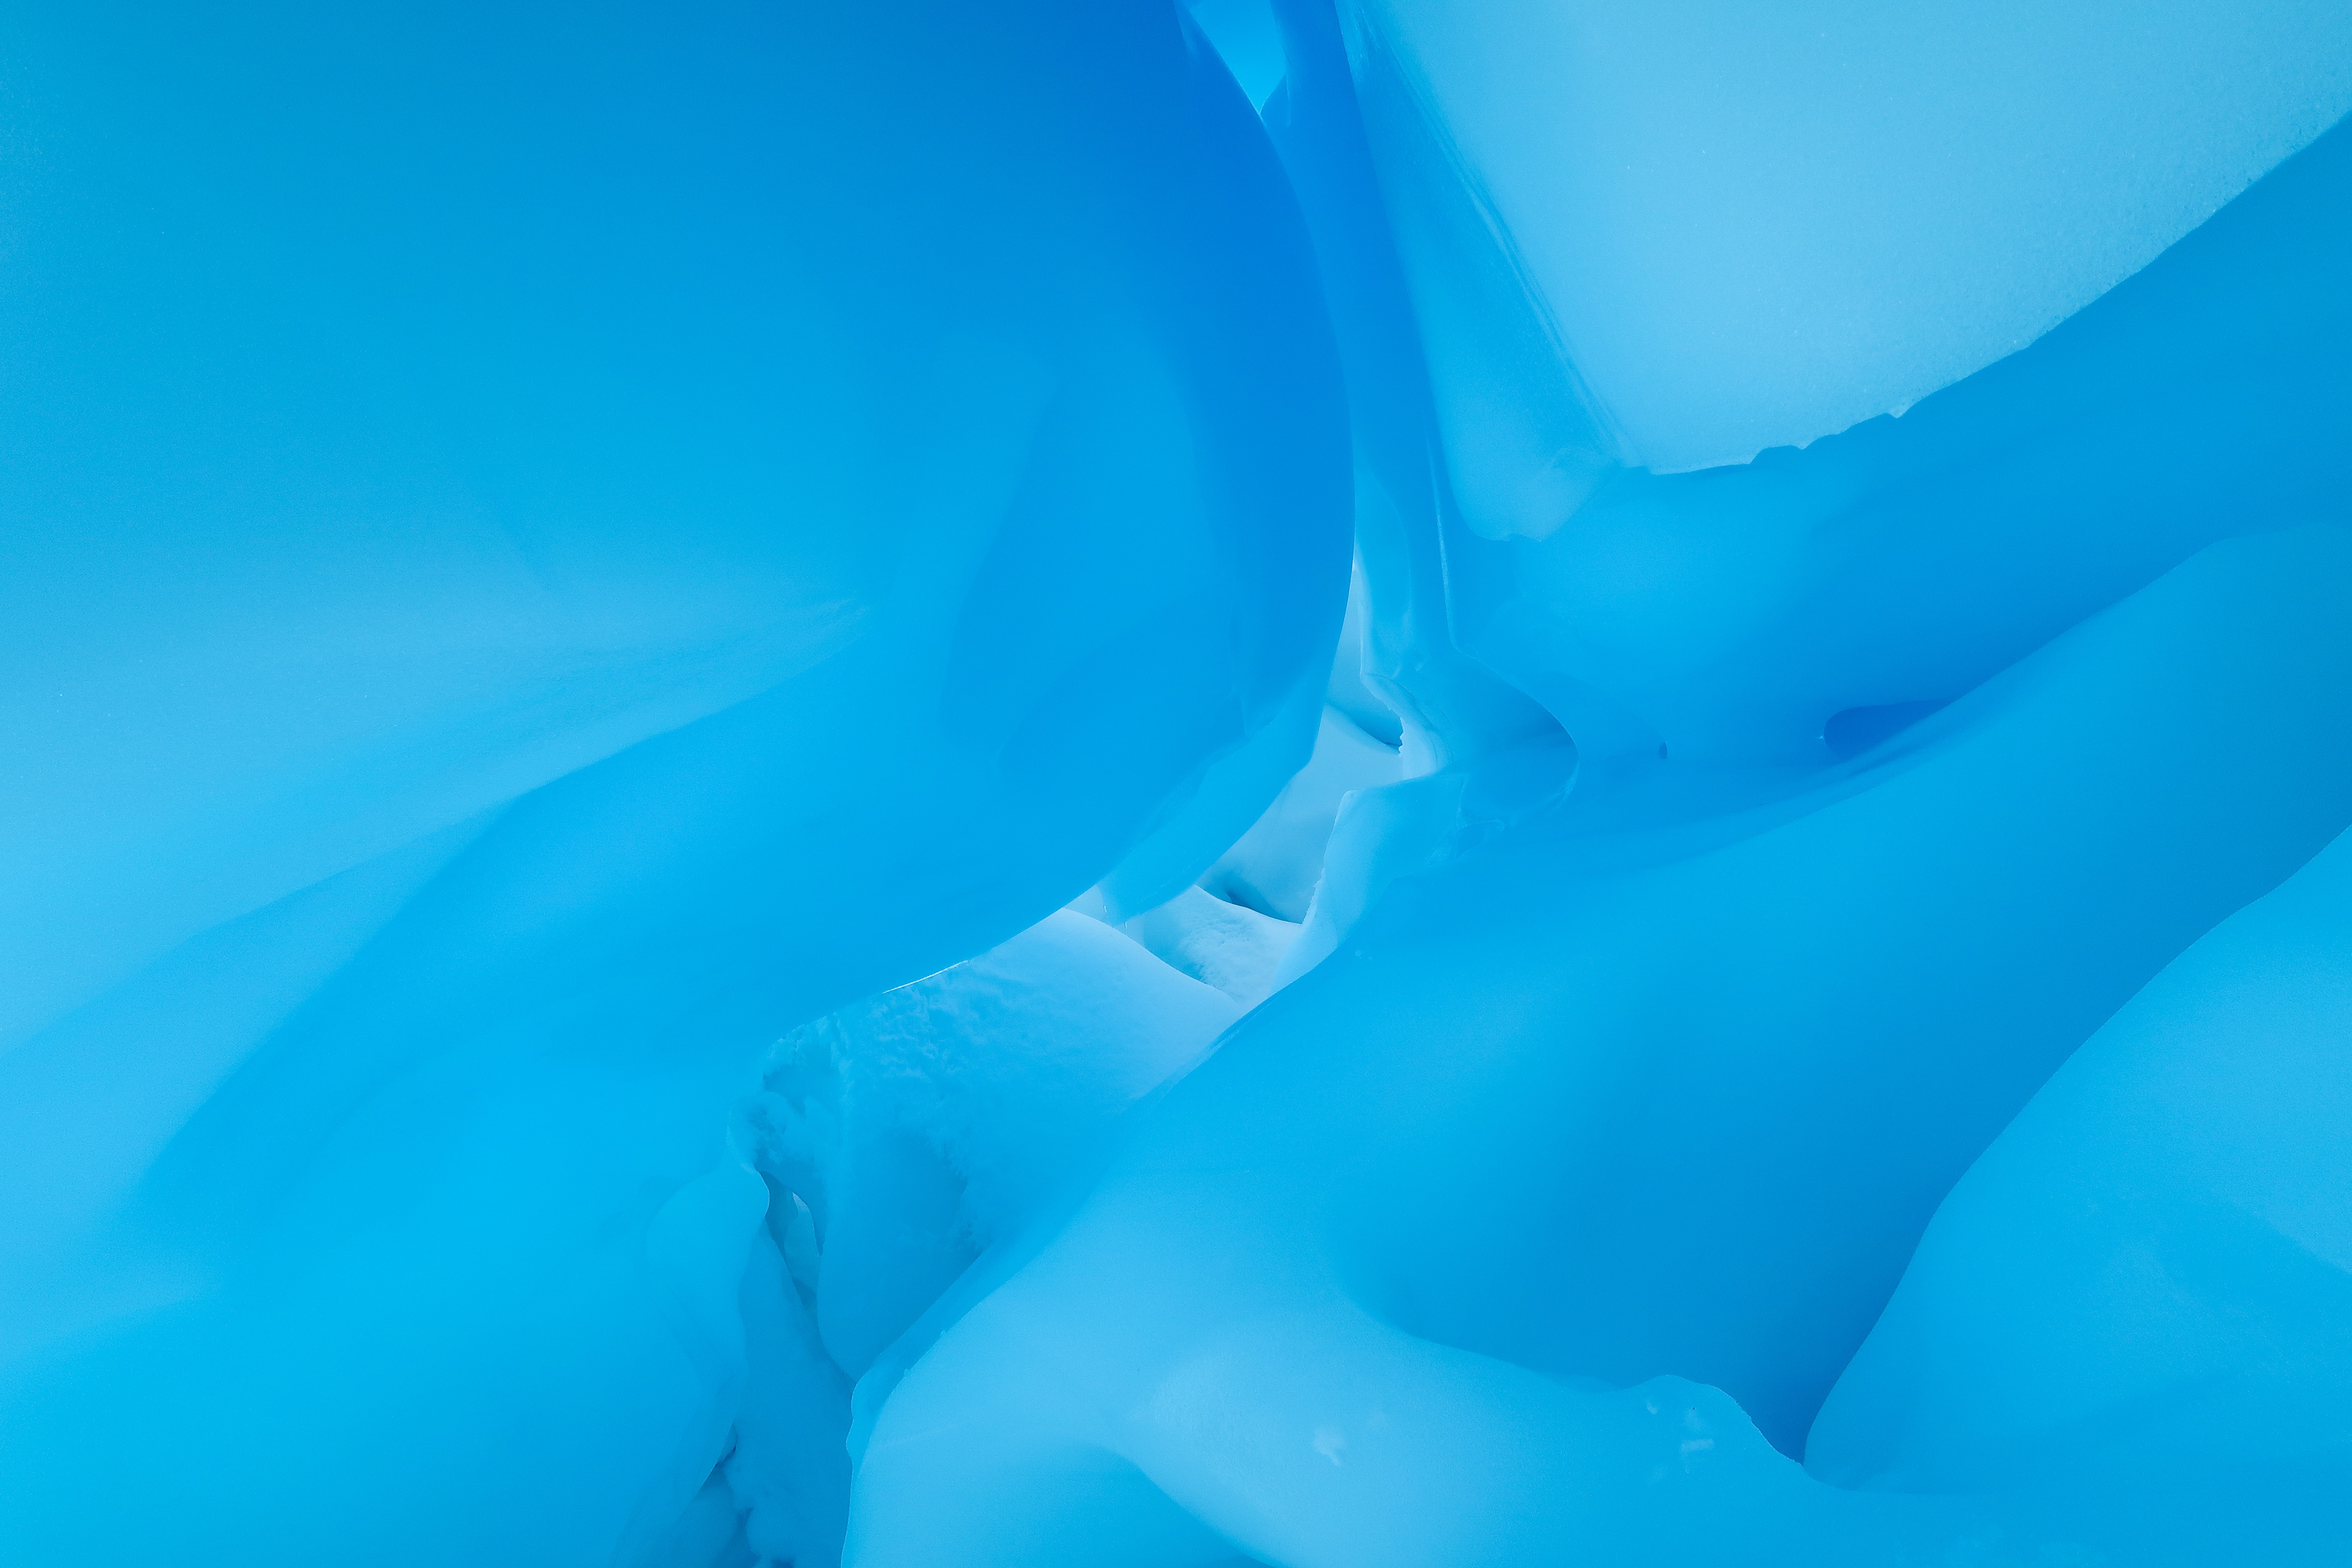 Glacier texture, ice, blue, textures Free Stock Photos